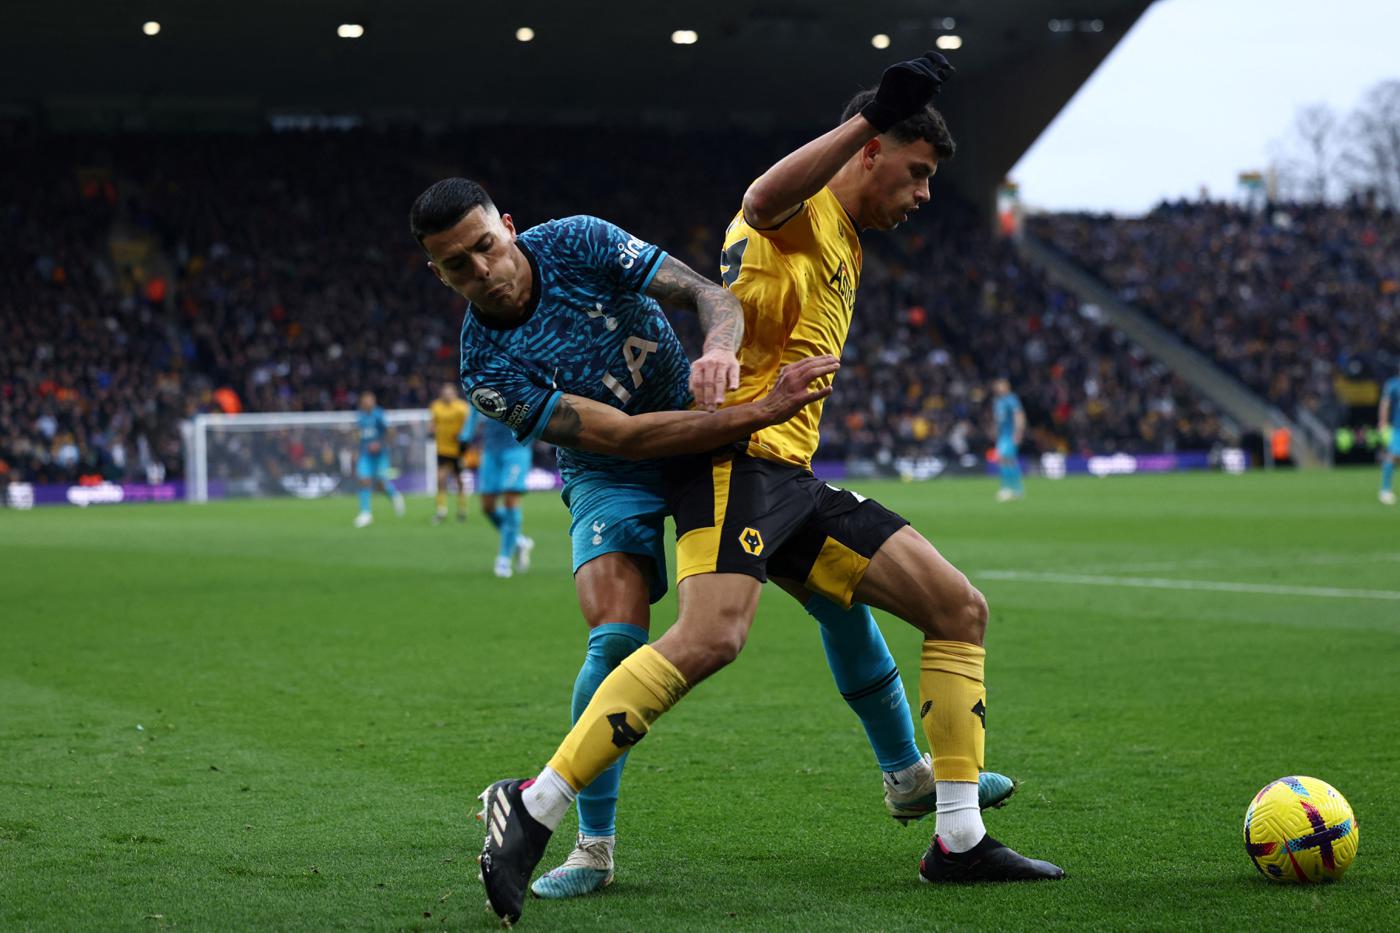 Wolverhampton v Tottenham - 1:0. English Championship, round 26. Match Review, Statistics